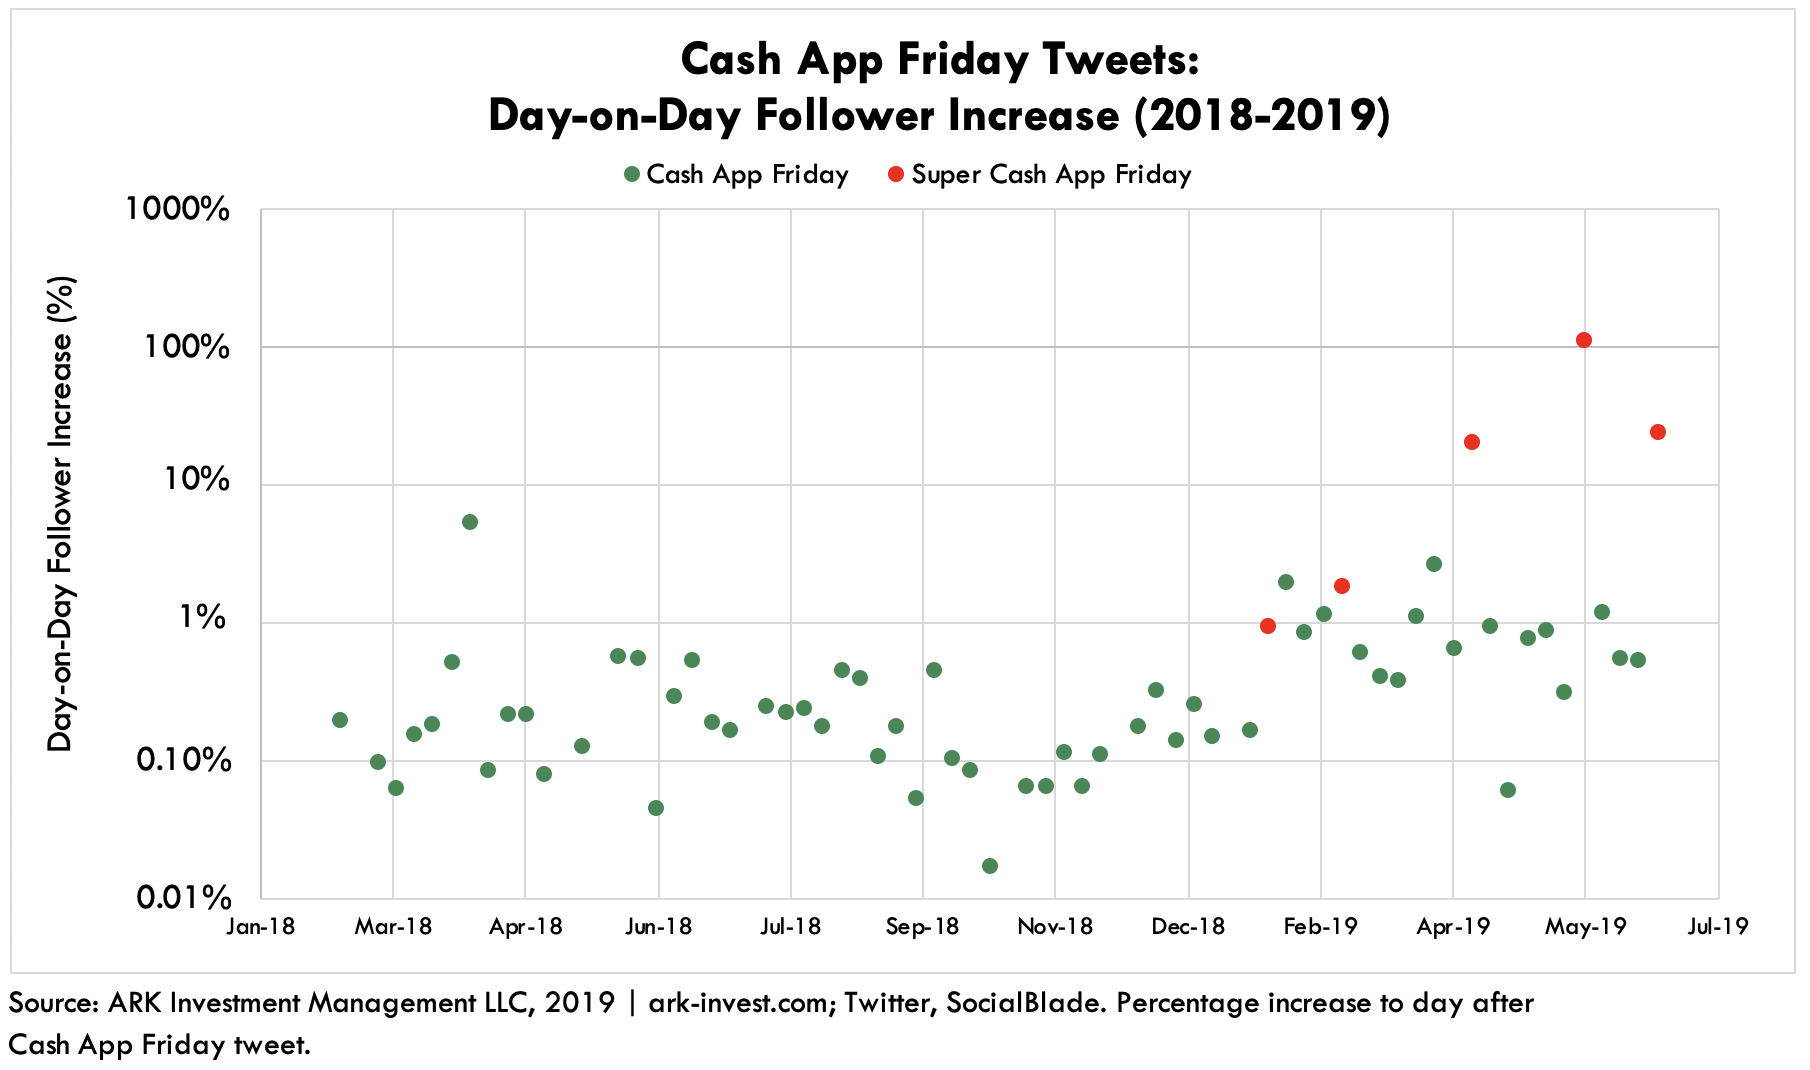 Cash App Twitter Friday Tweets Follower Increase